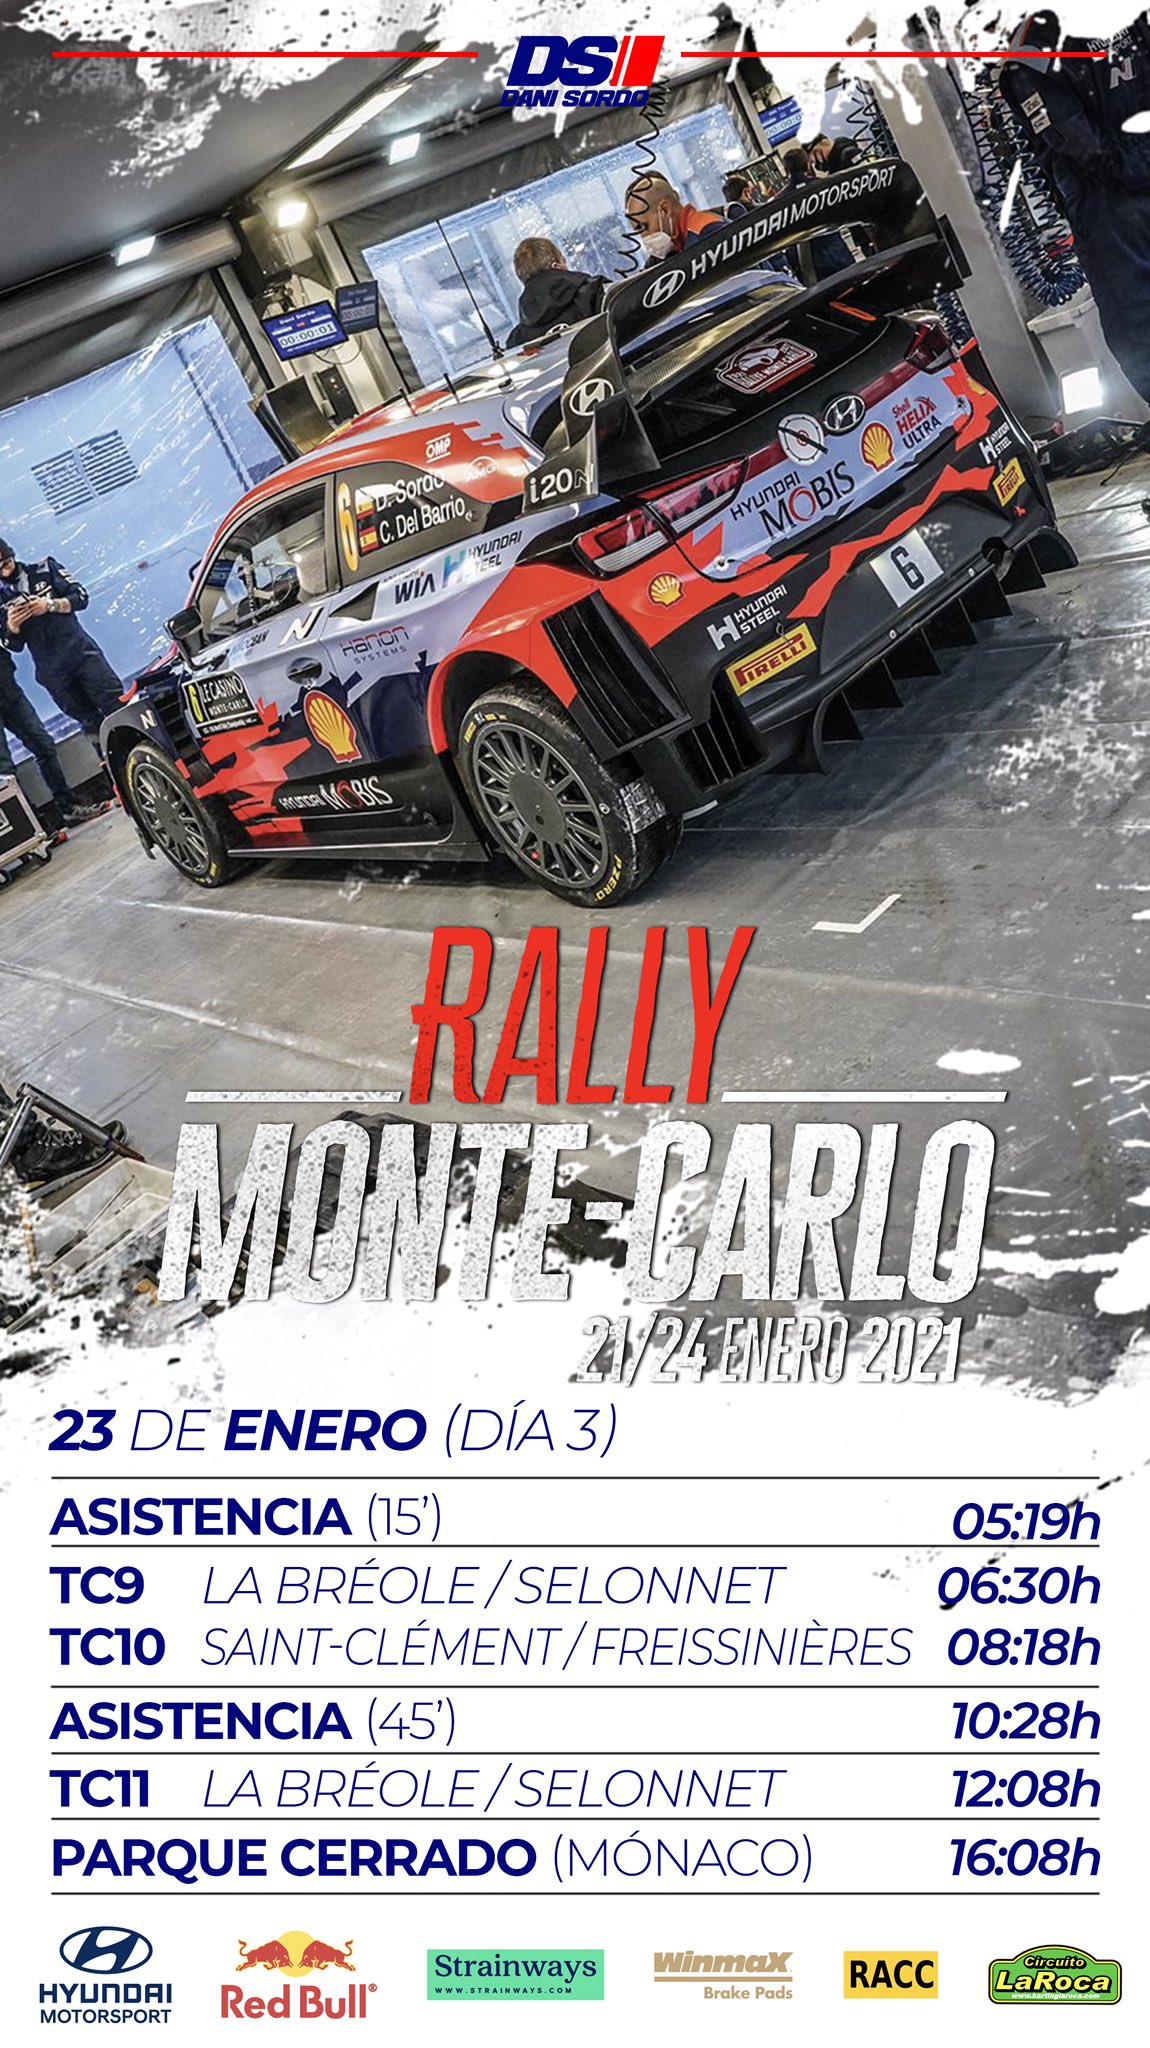 WRC: 89º Rallye Automobile de Monte-Carlo [18-24 Enero] - Página 9 EsY-9MMXMAYHysf?format=jpg&name=large